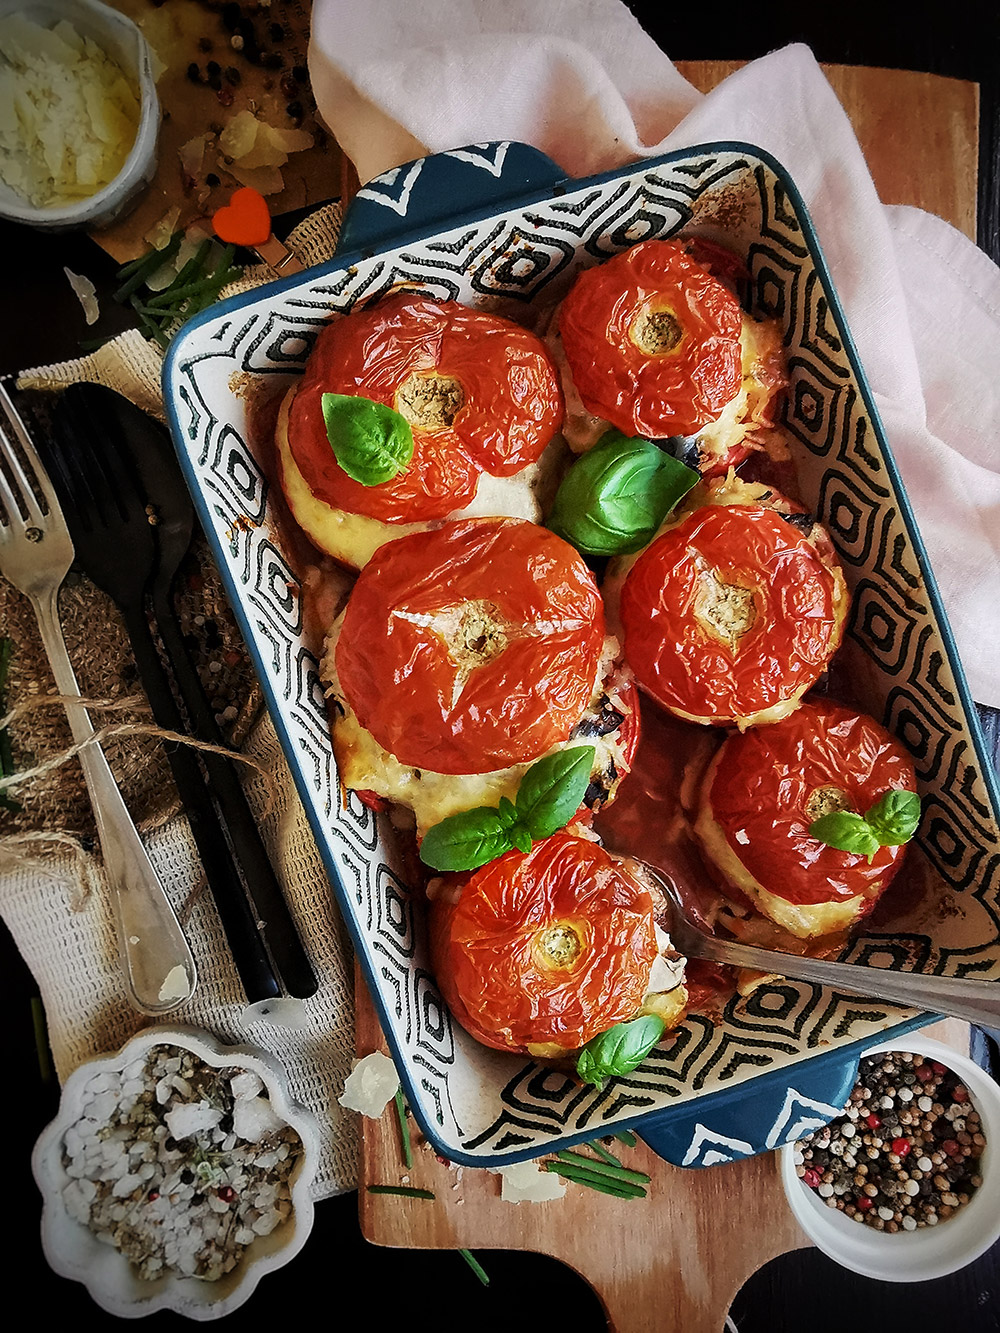 Cheesy baked stuffed tomatoes